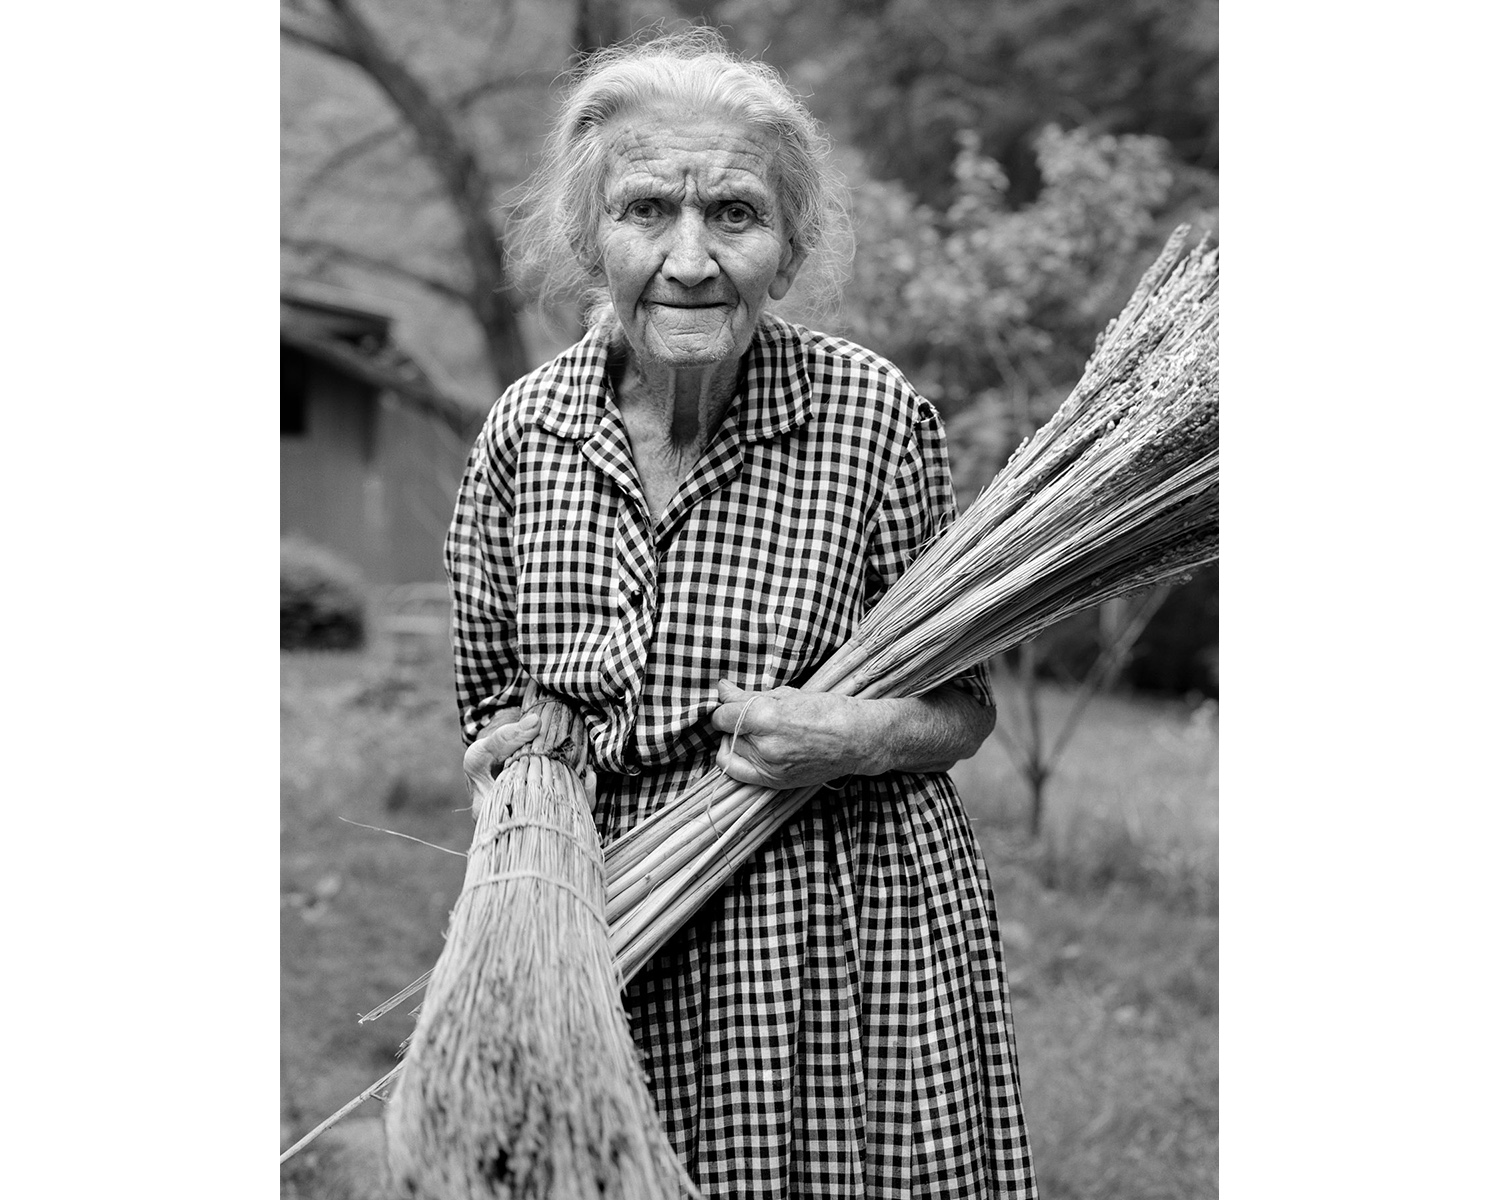 Mabel Cutshall broom straw handmade broom Appalchian photographer Tim Barnwell